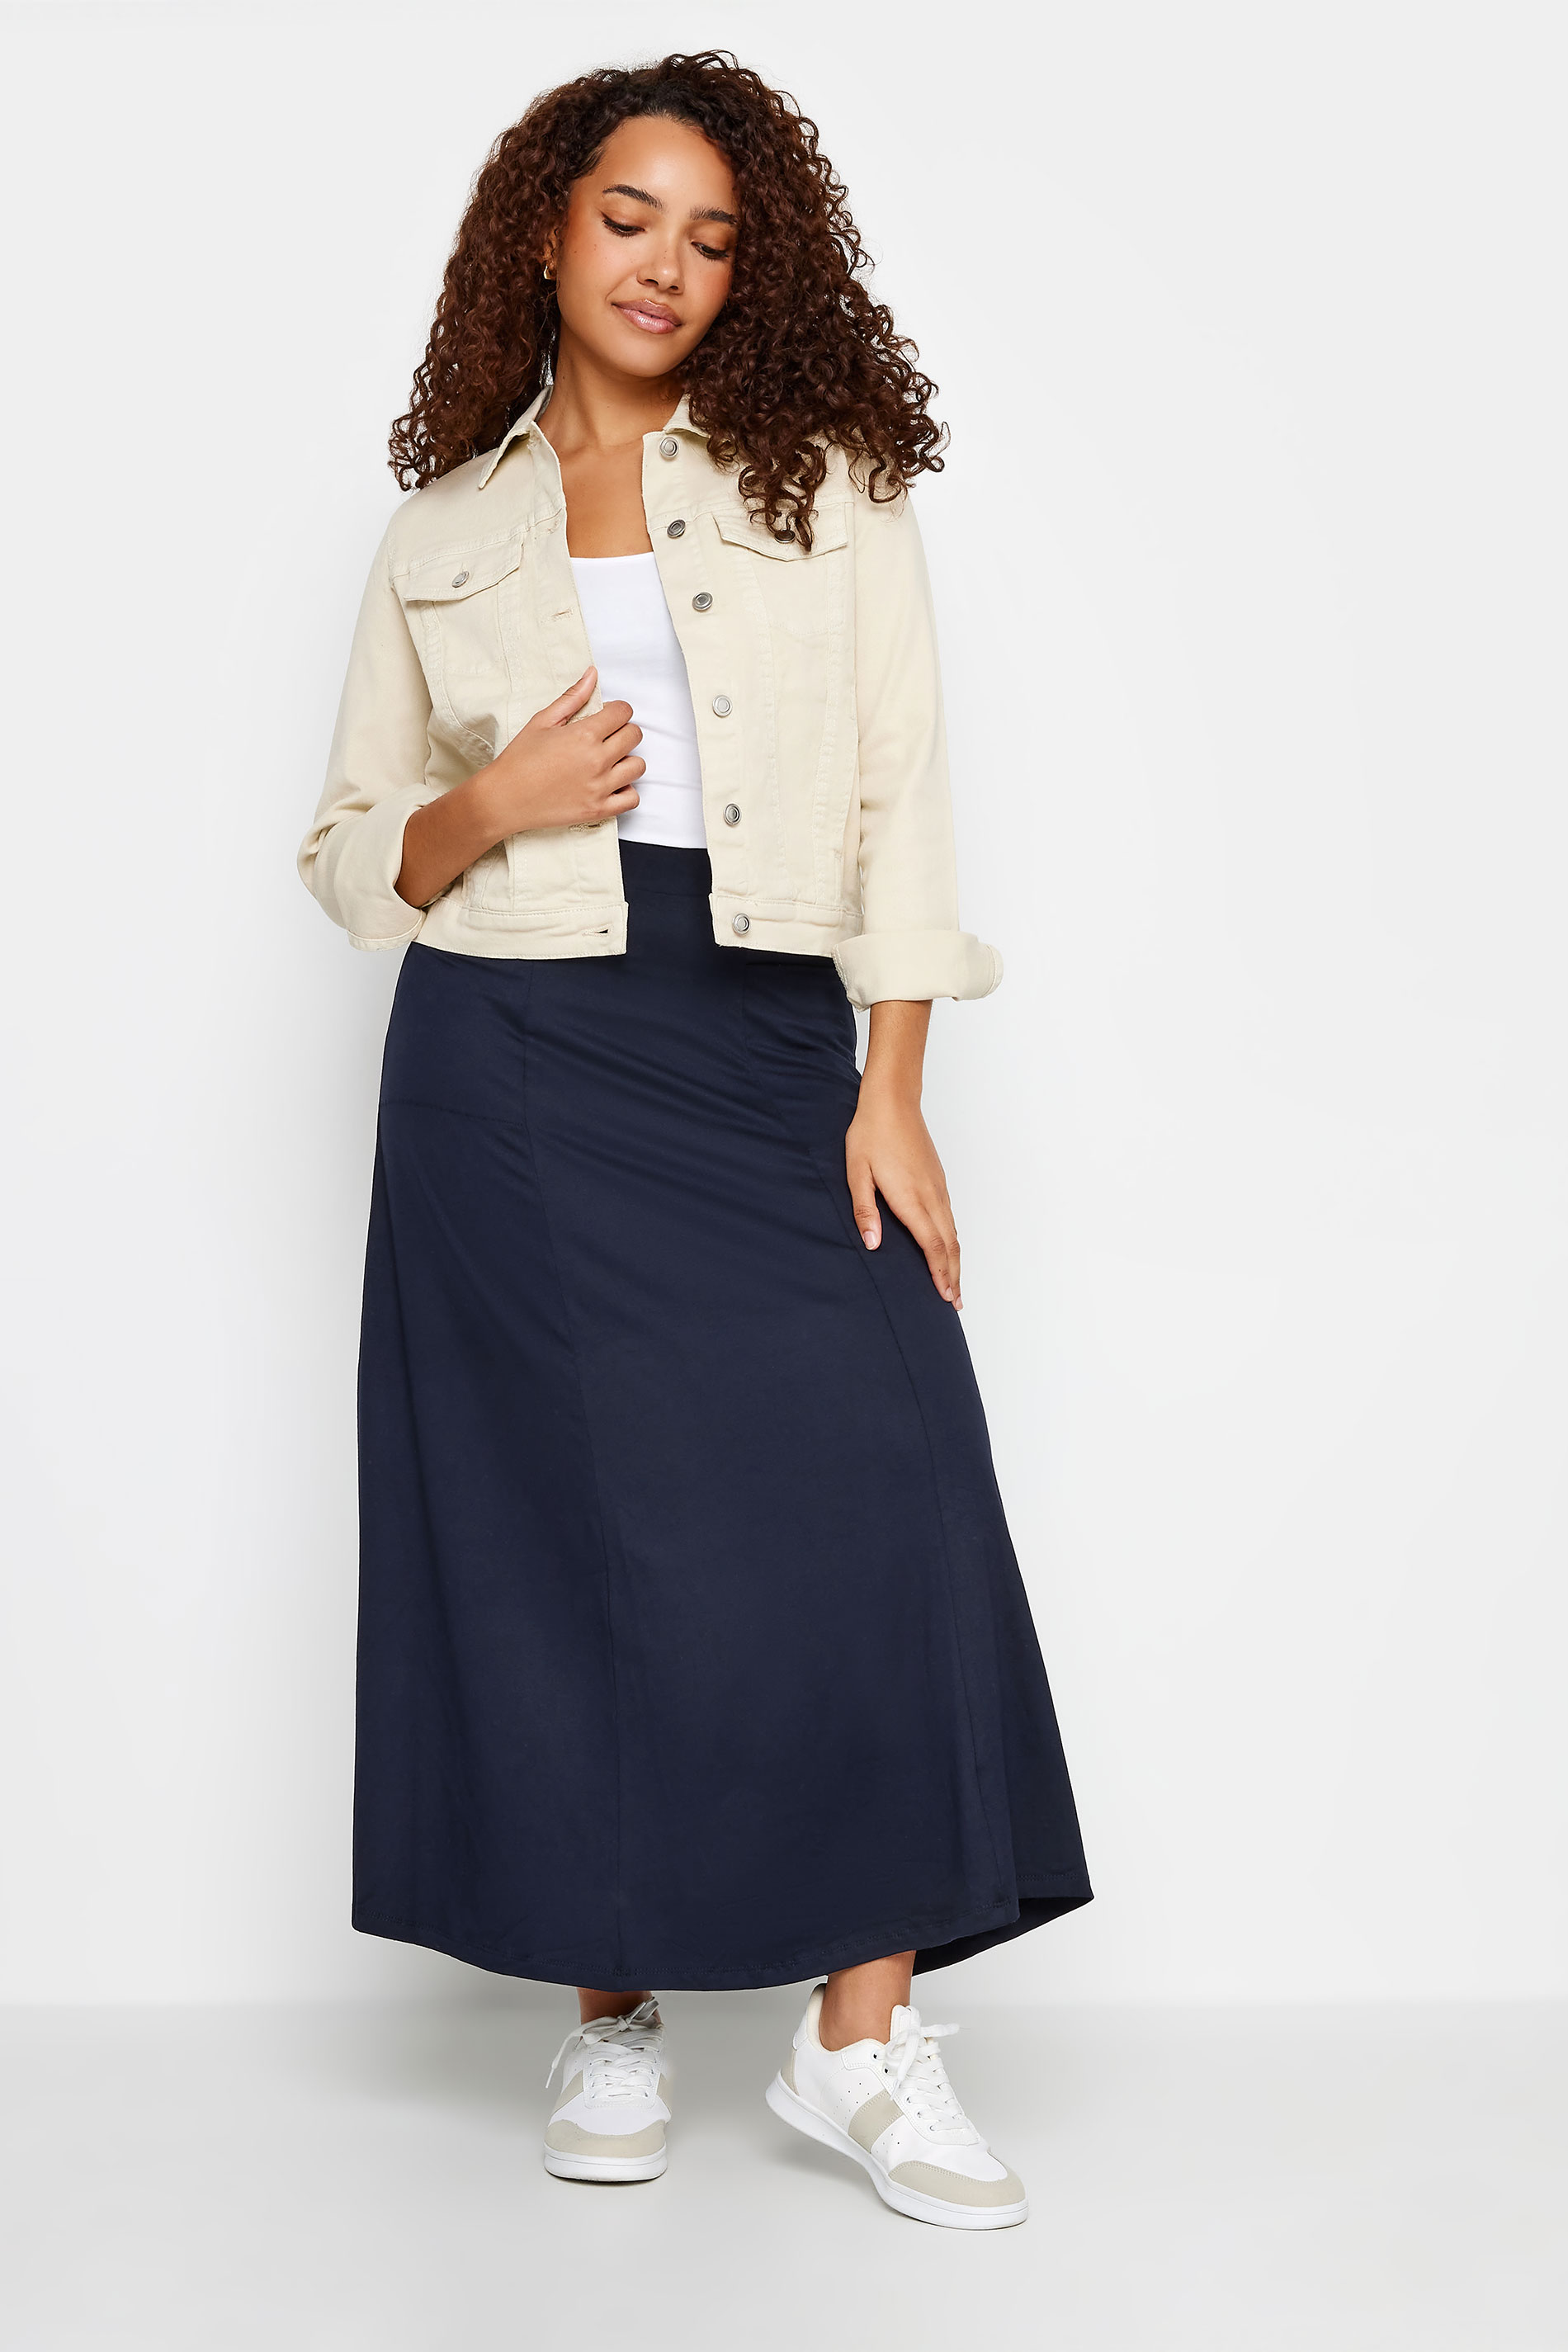 M&Co Navy Blue Pocket Maxi Skirt | M&Co 2